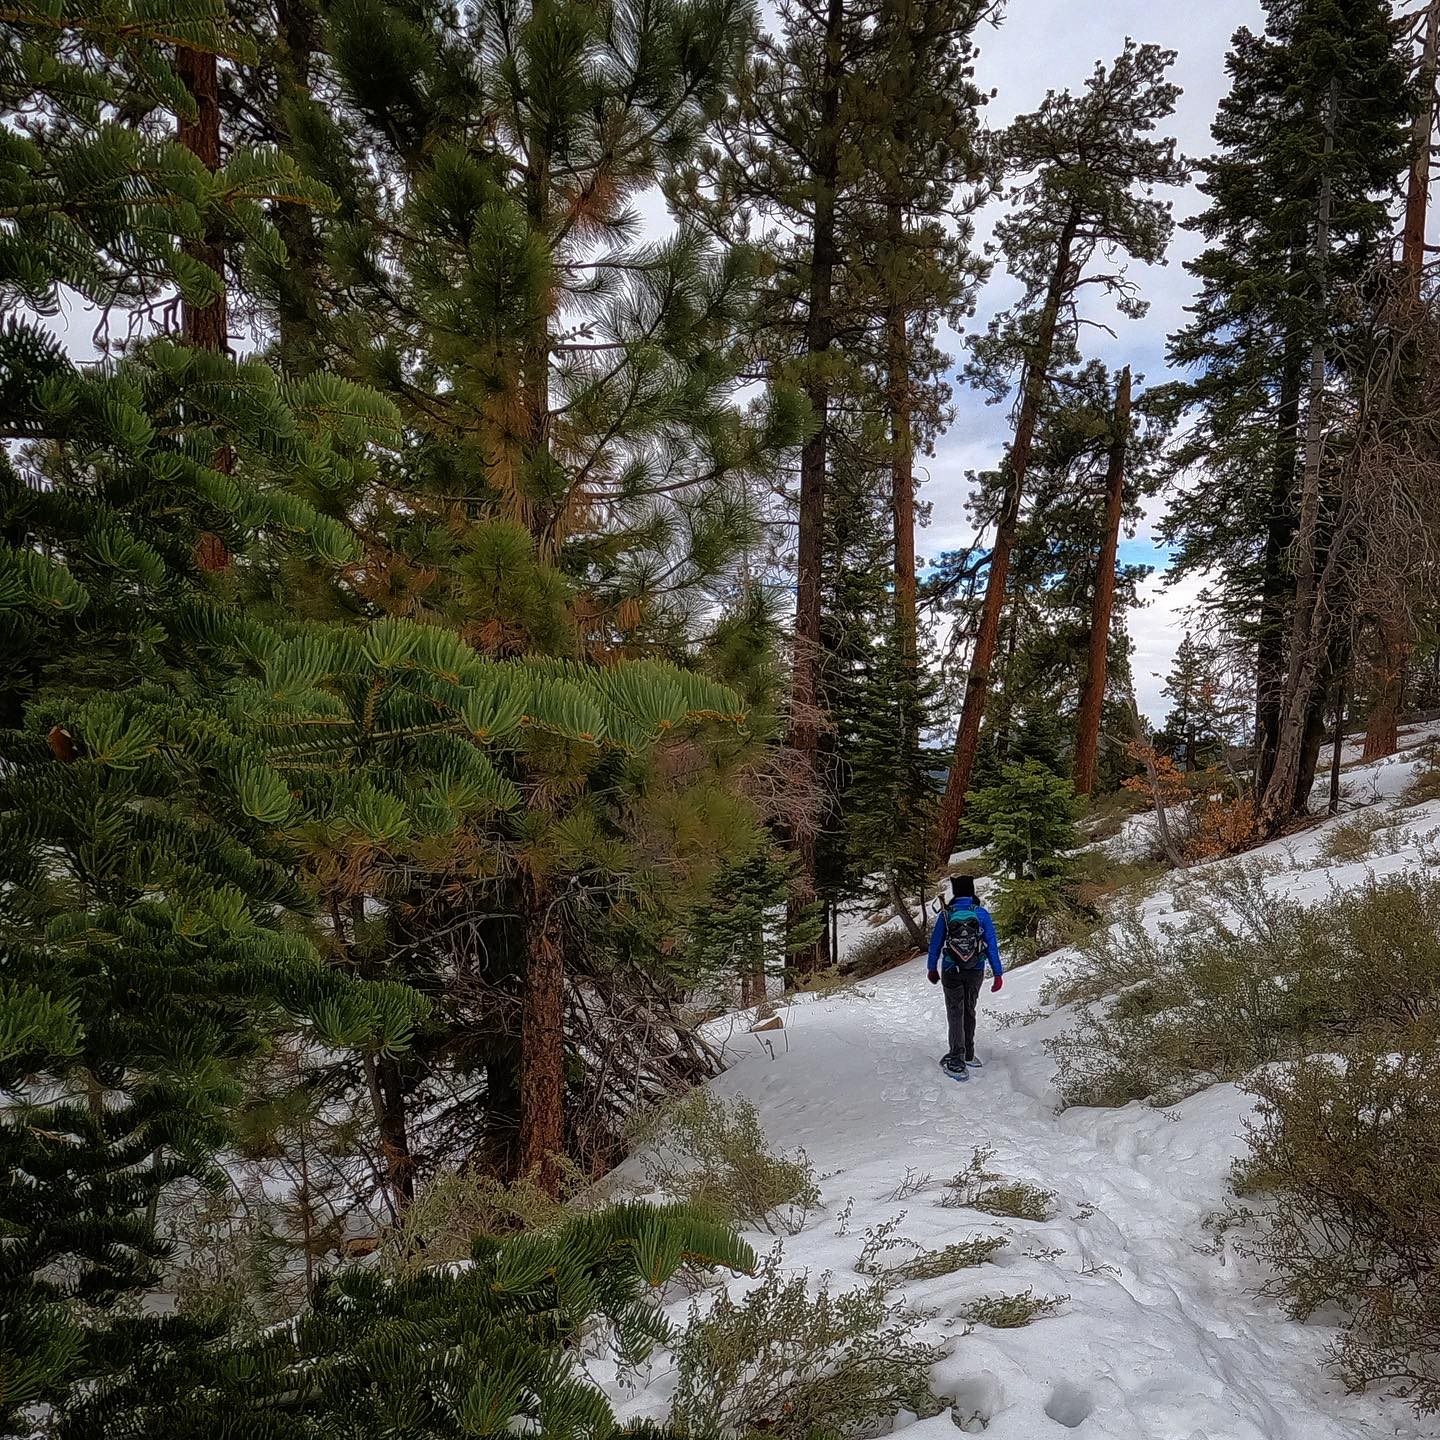 Day trip to Big Bear. We heard there were snowshoe opportunities. 
________________
#bigbear #goprohero9 #snowshoeing